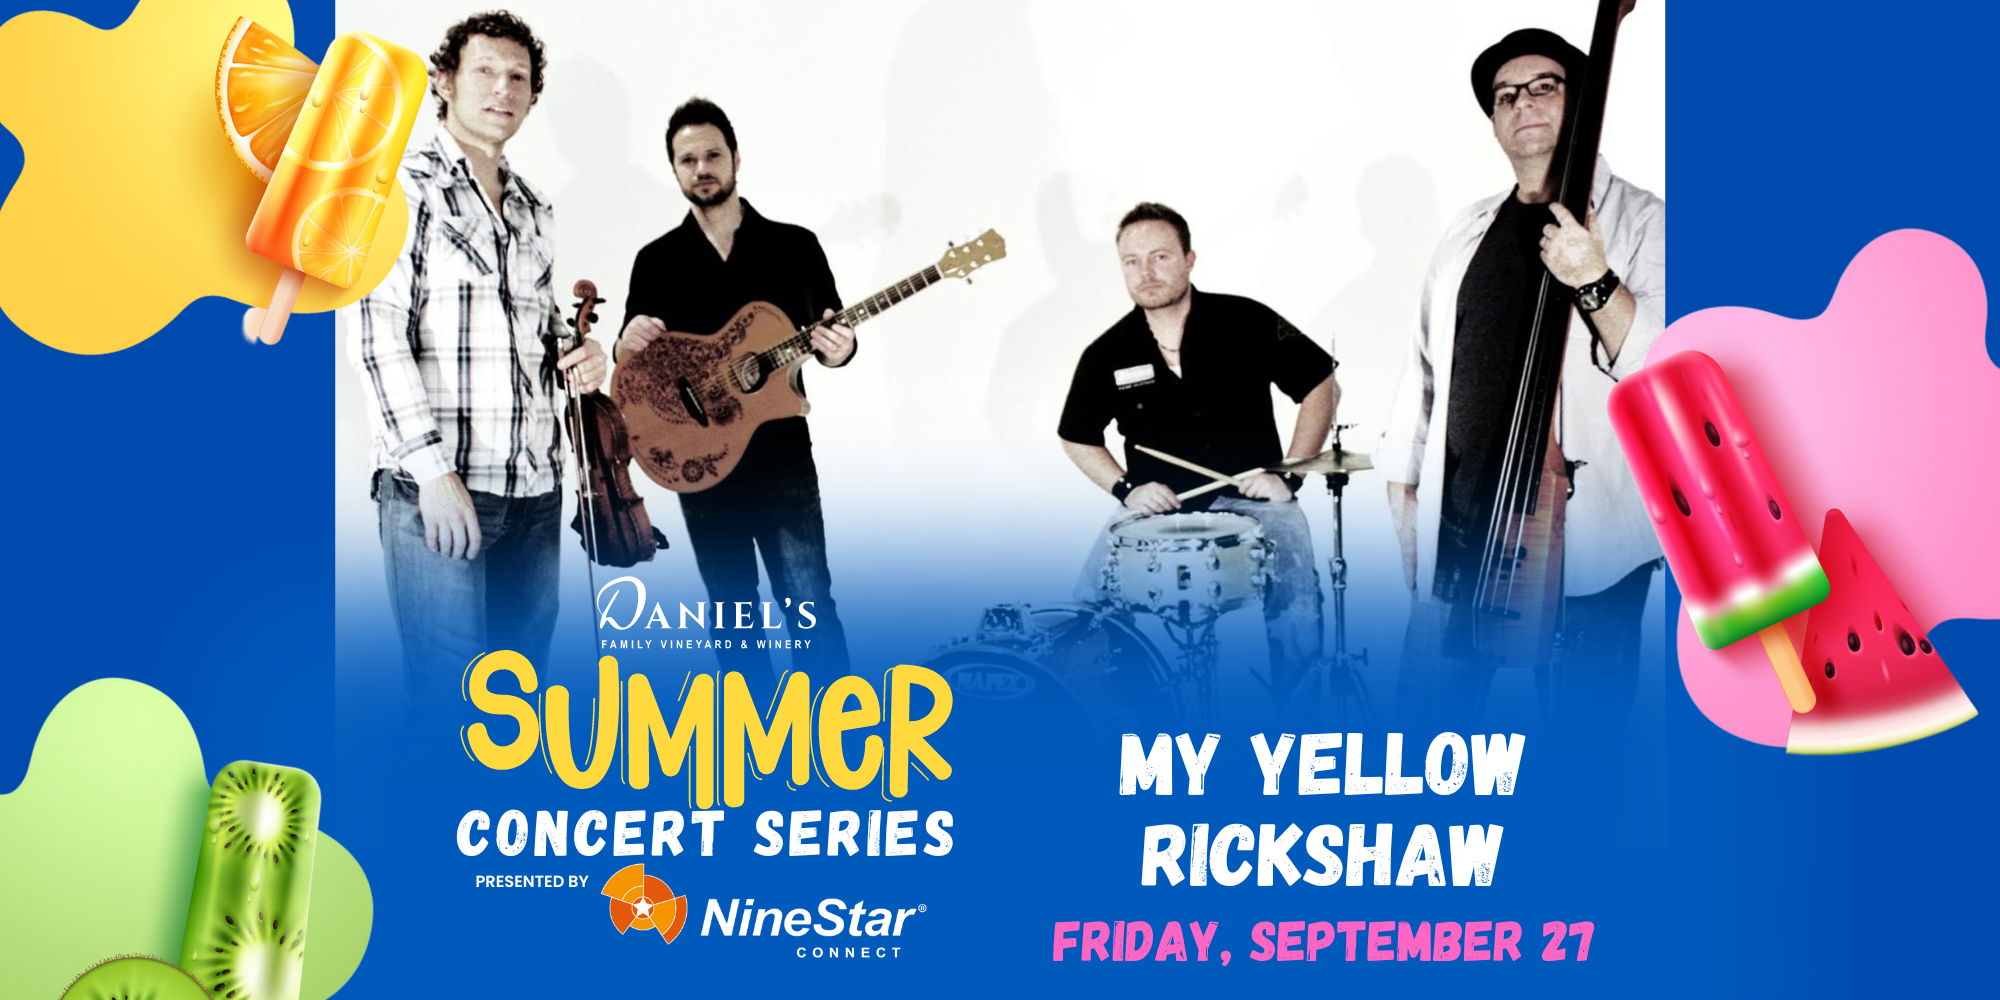 Summer Concert Series at Daniel's Vineyard promotional image